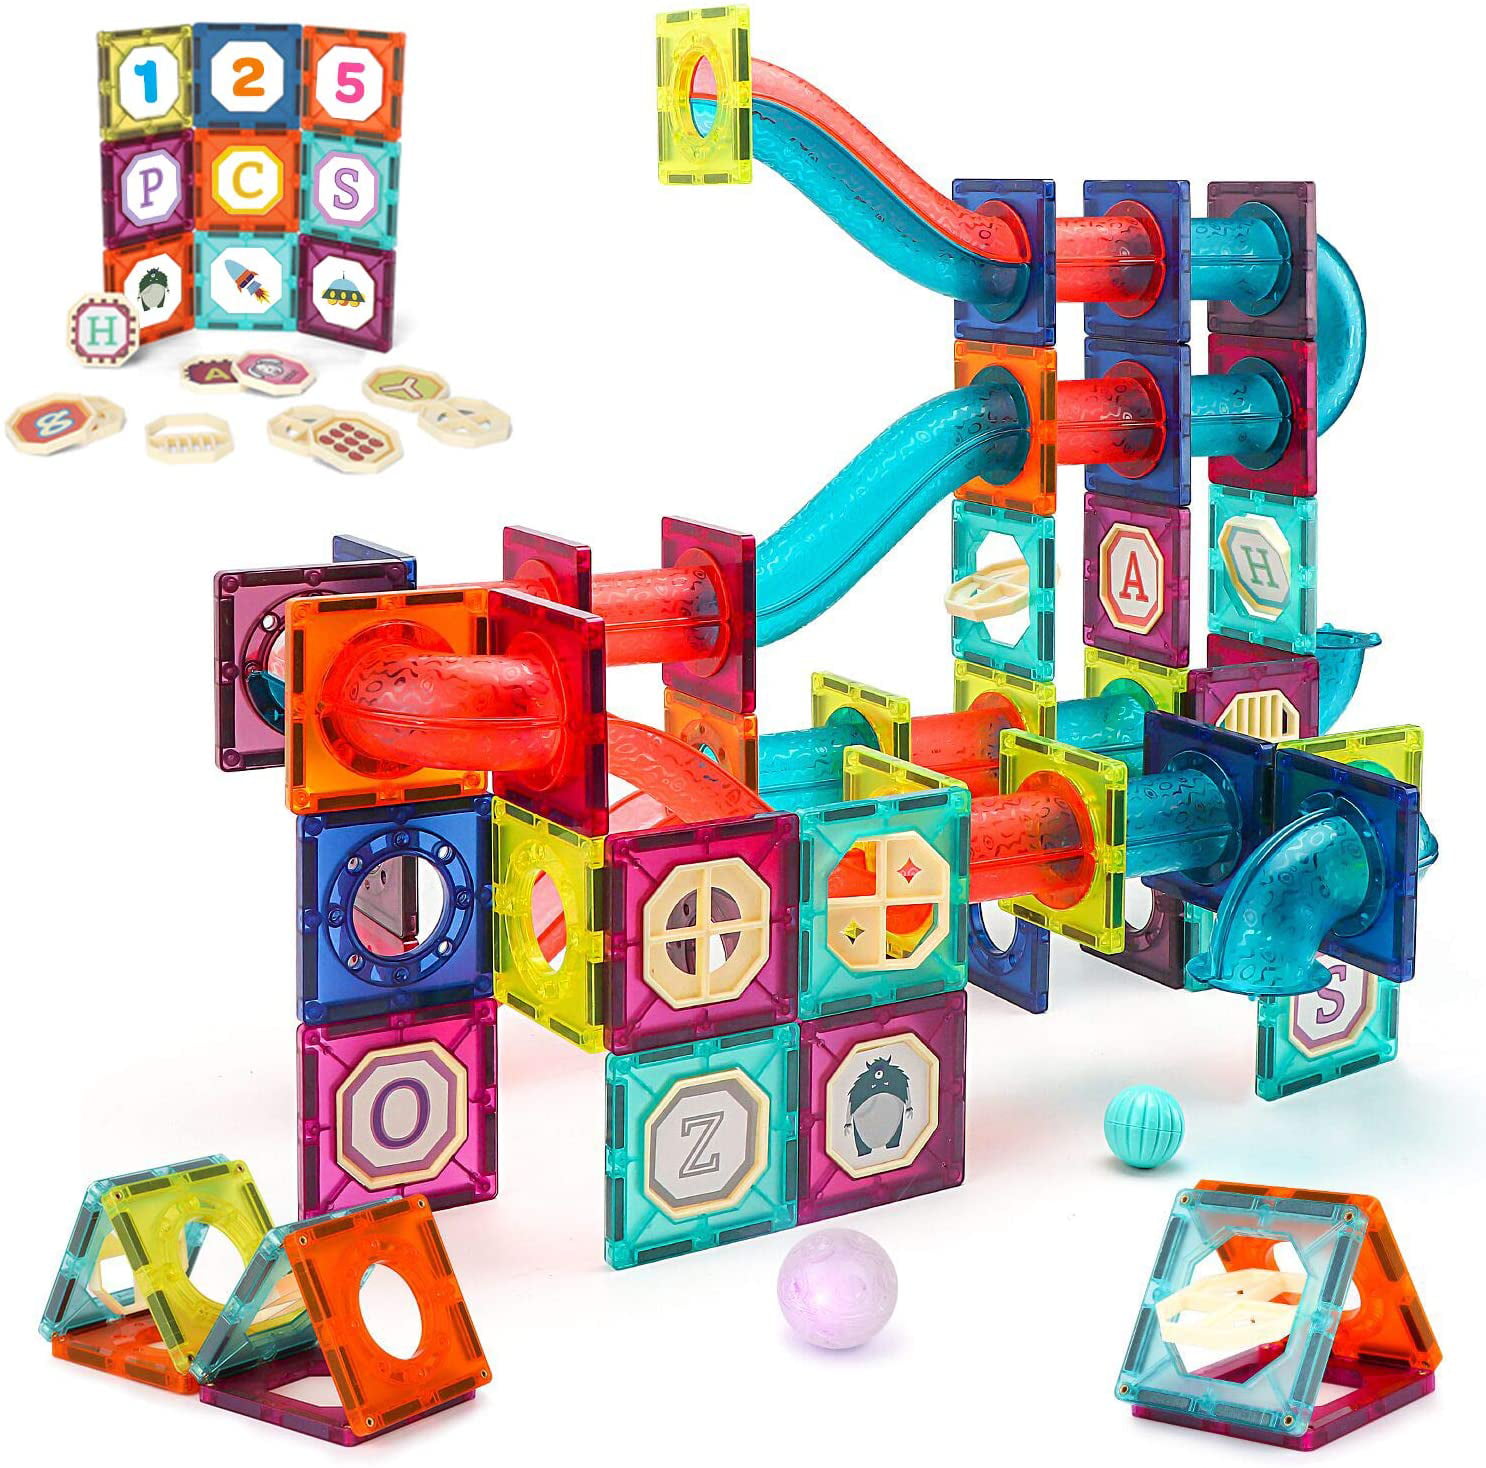 Kids Building Toys 133 Pcs Magnetic Tiles Blocks Sets Gift For Age 2 3 4 5 6 7 8 